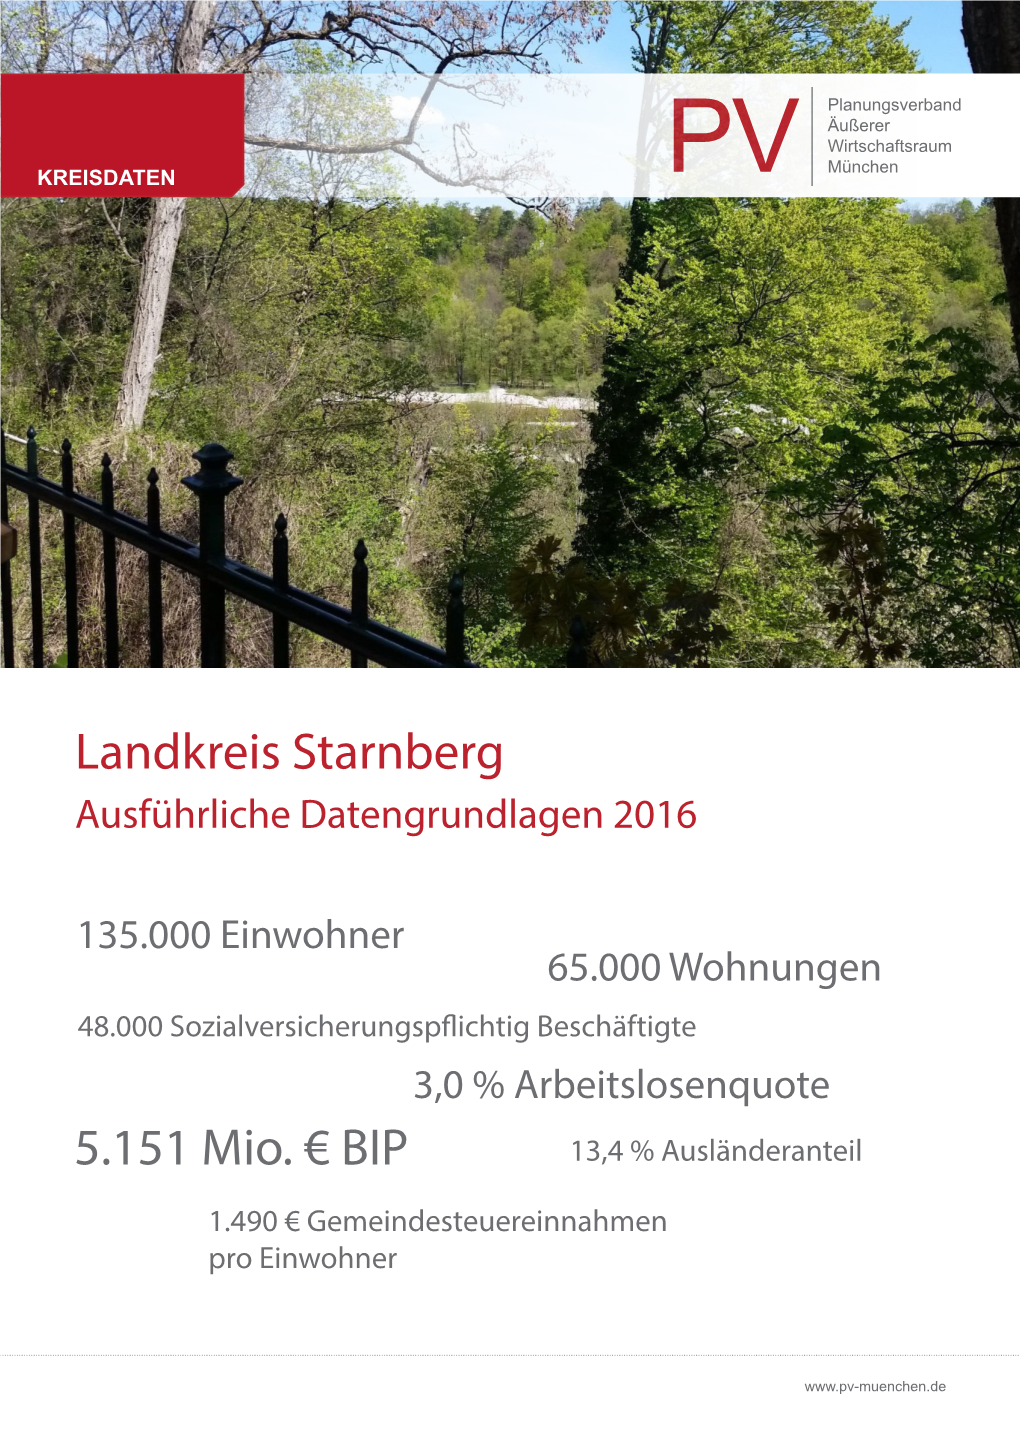 Landkreis Starnberg 5.151 Mio. €